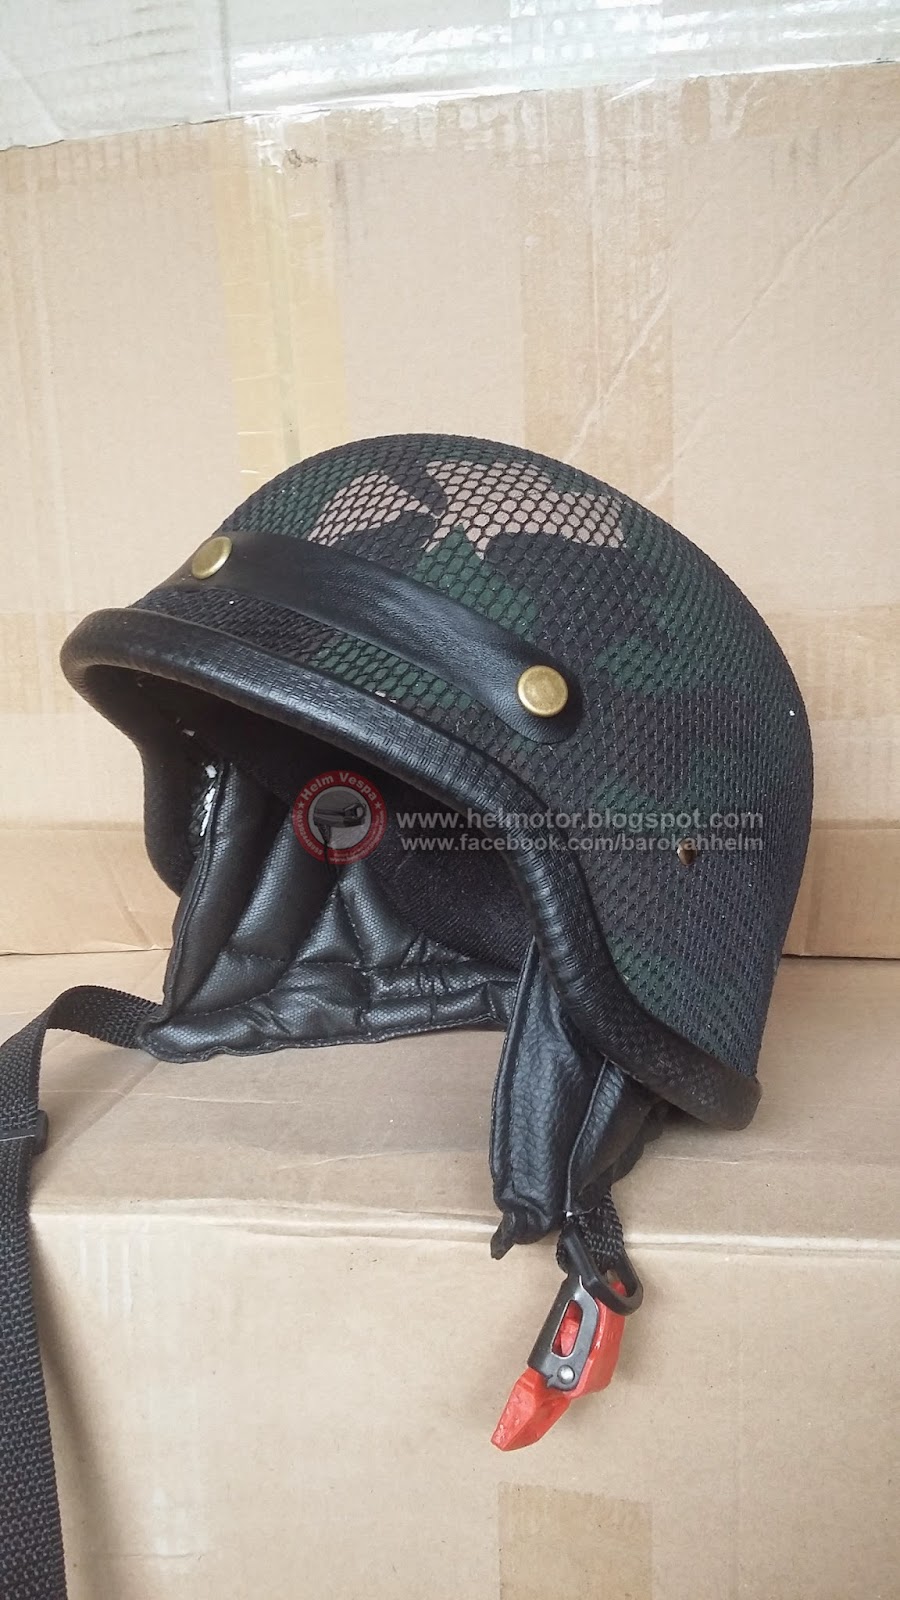 Helm Densus Army Jaring K531i Helm Vespa